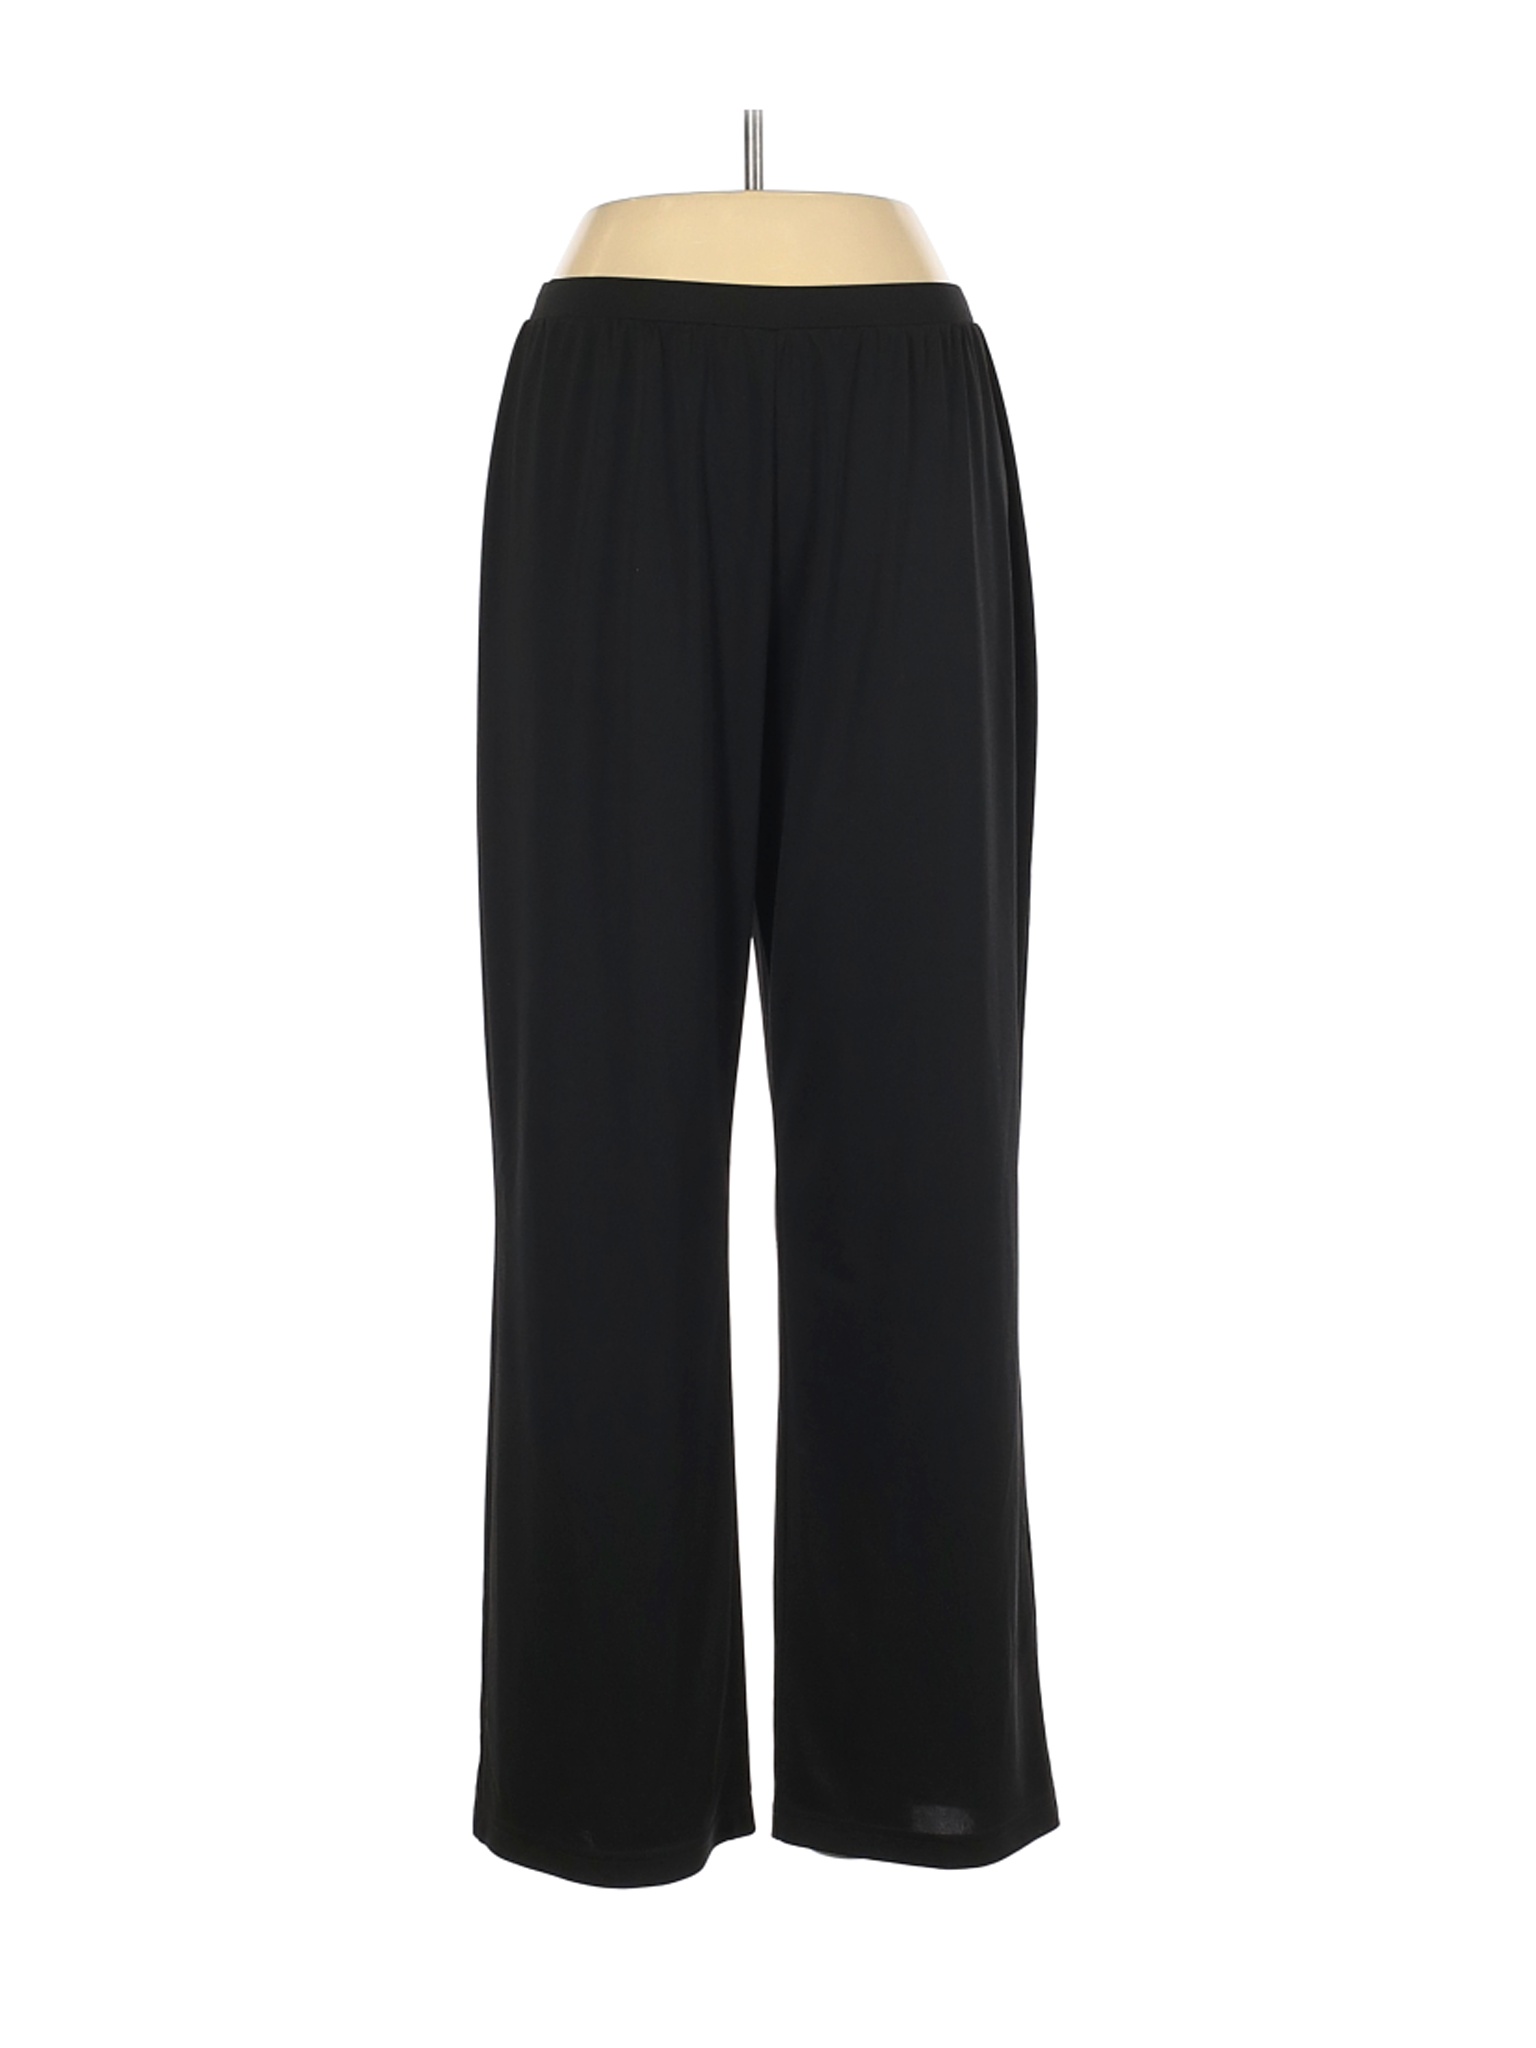 Worthington Women Black Casual Pants L Petites | eBay